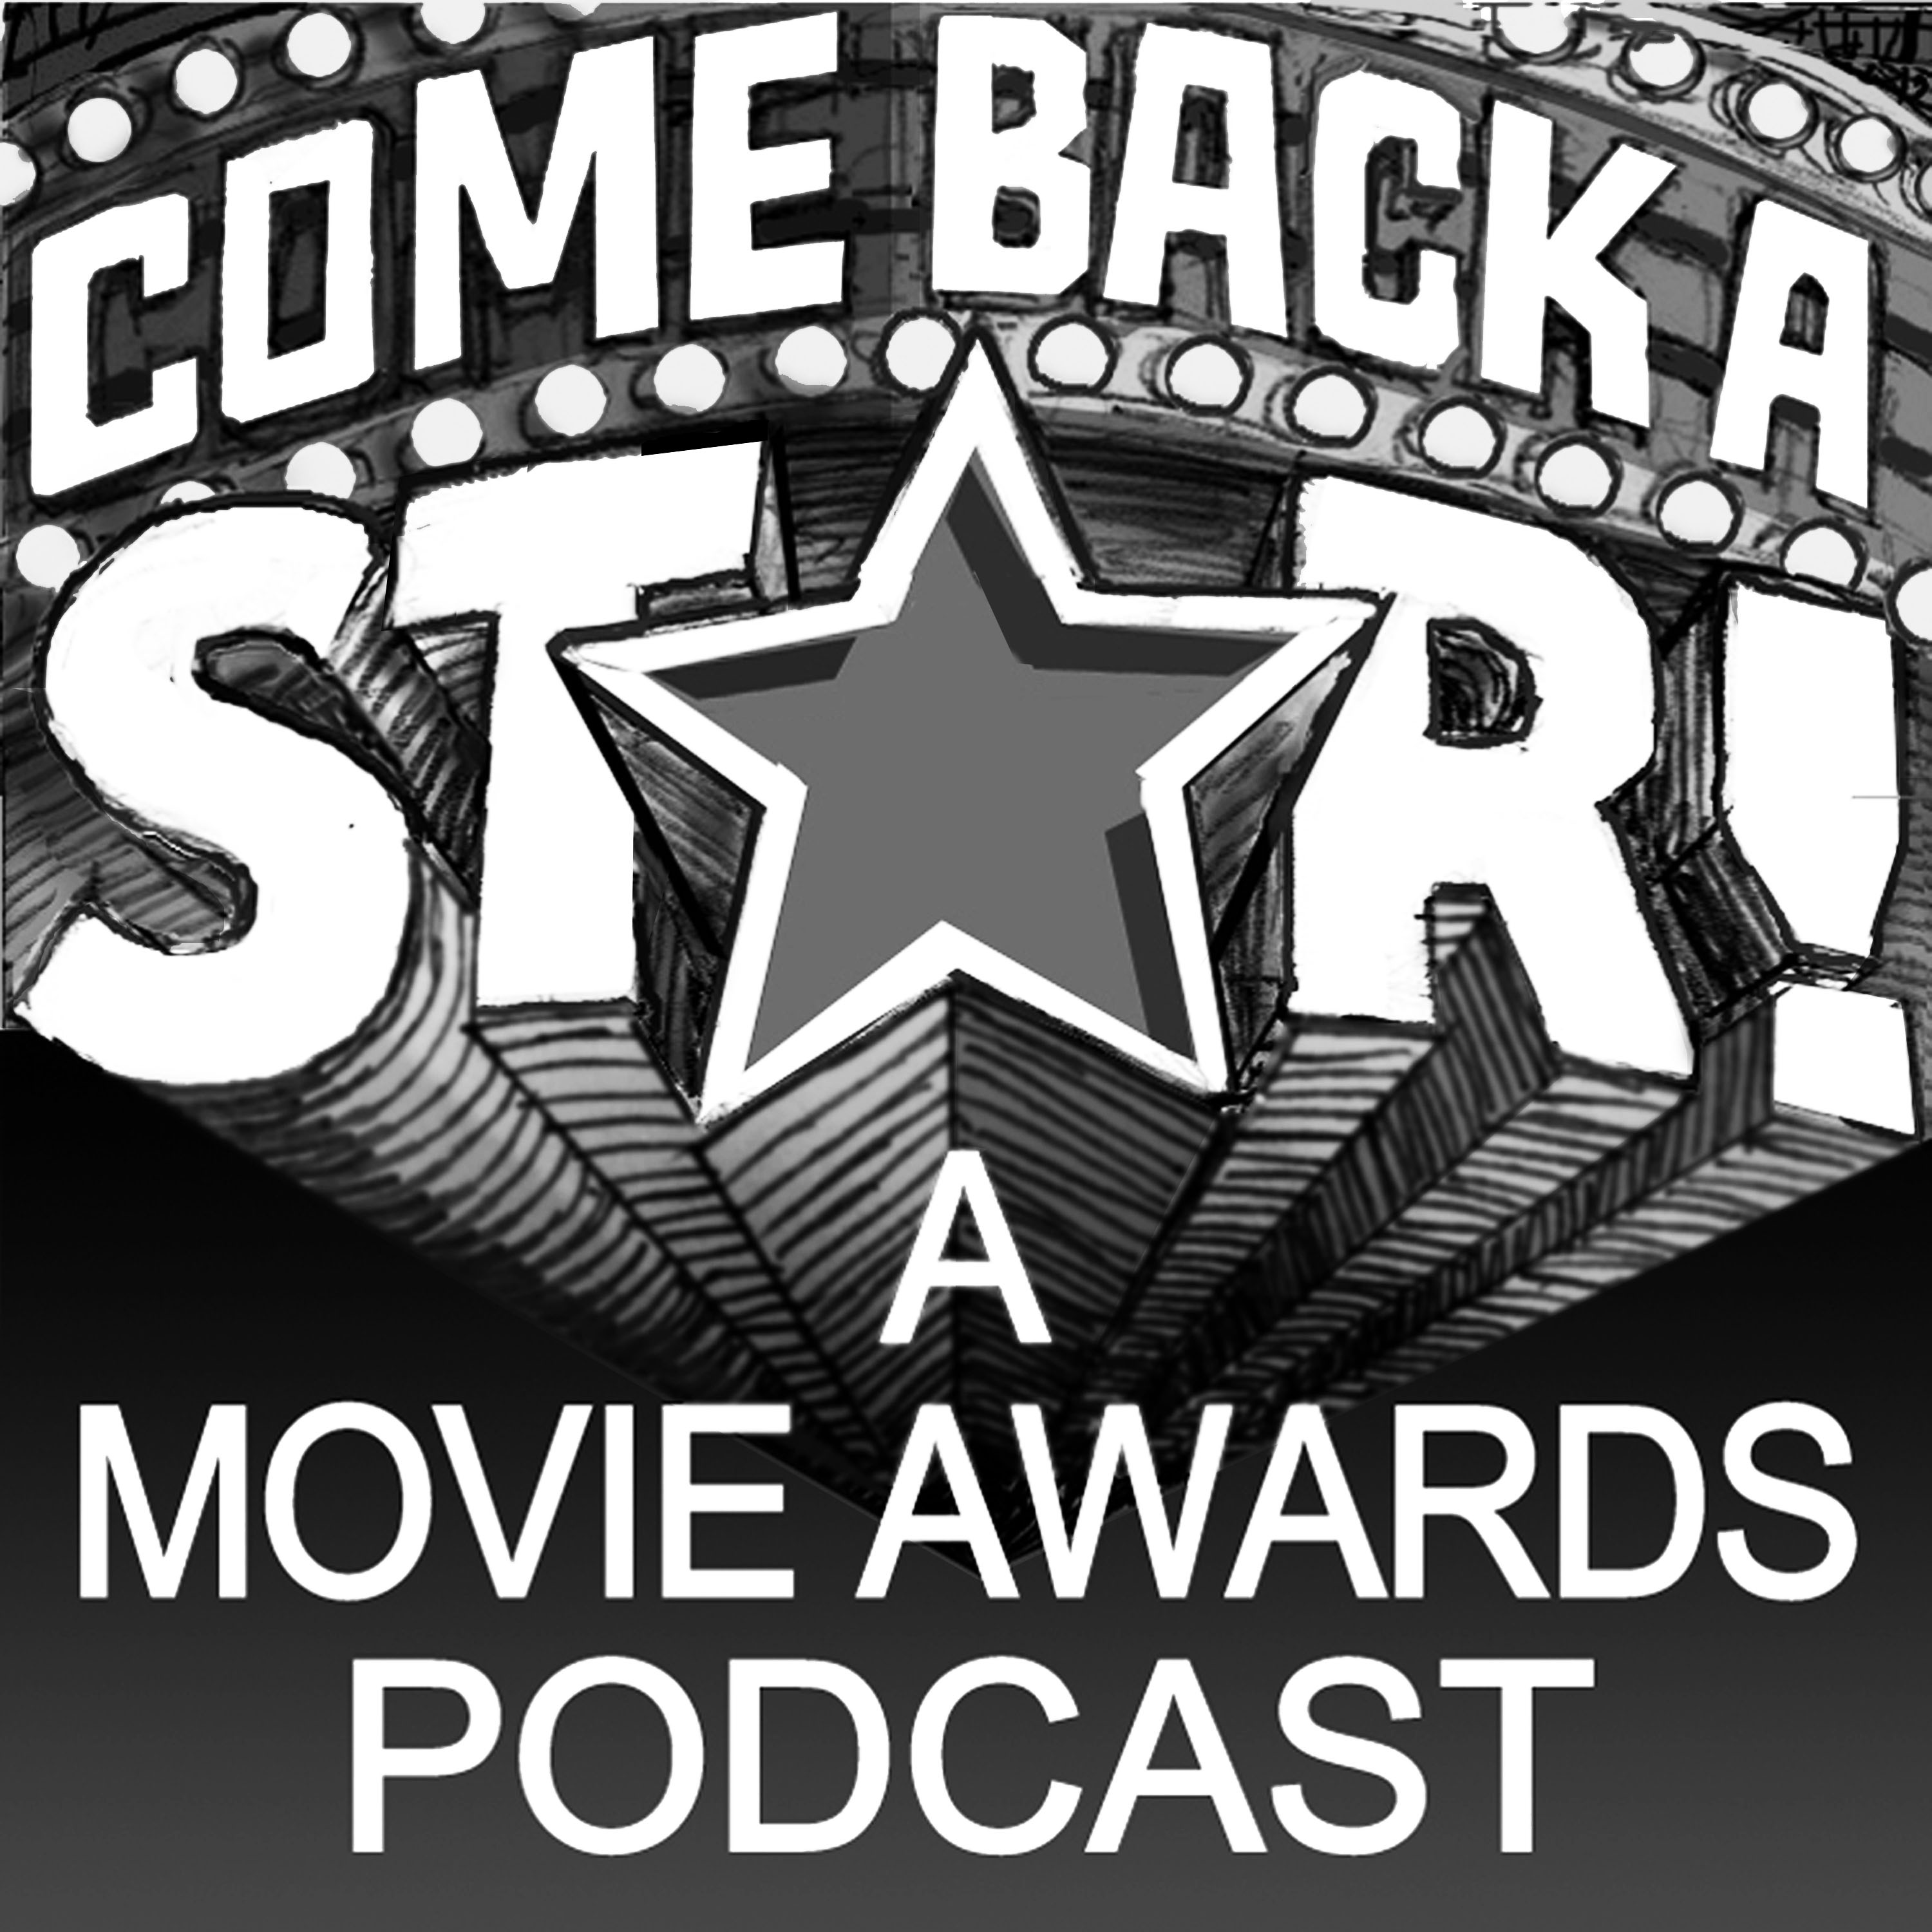 Come Back a Star A Movie Award Podcast